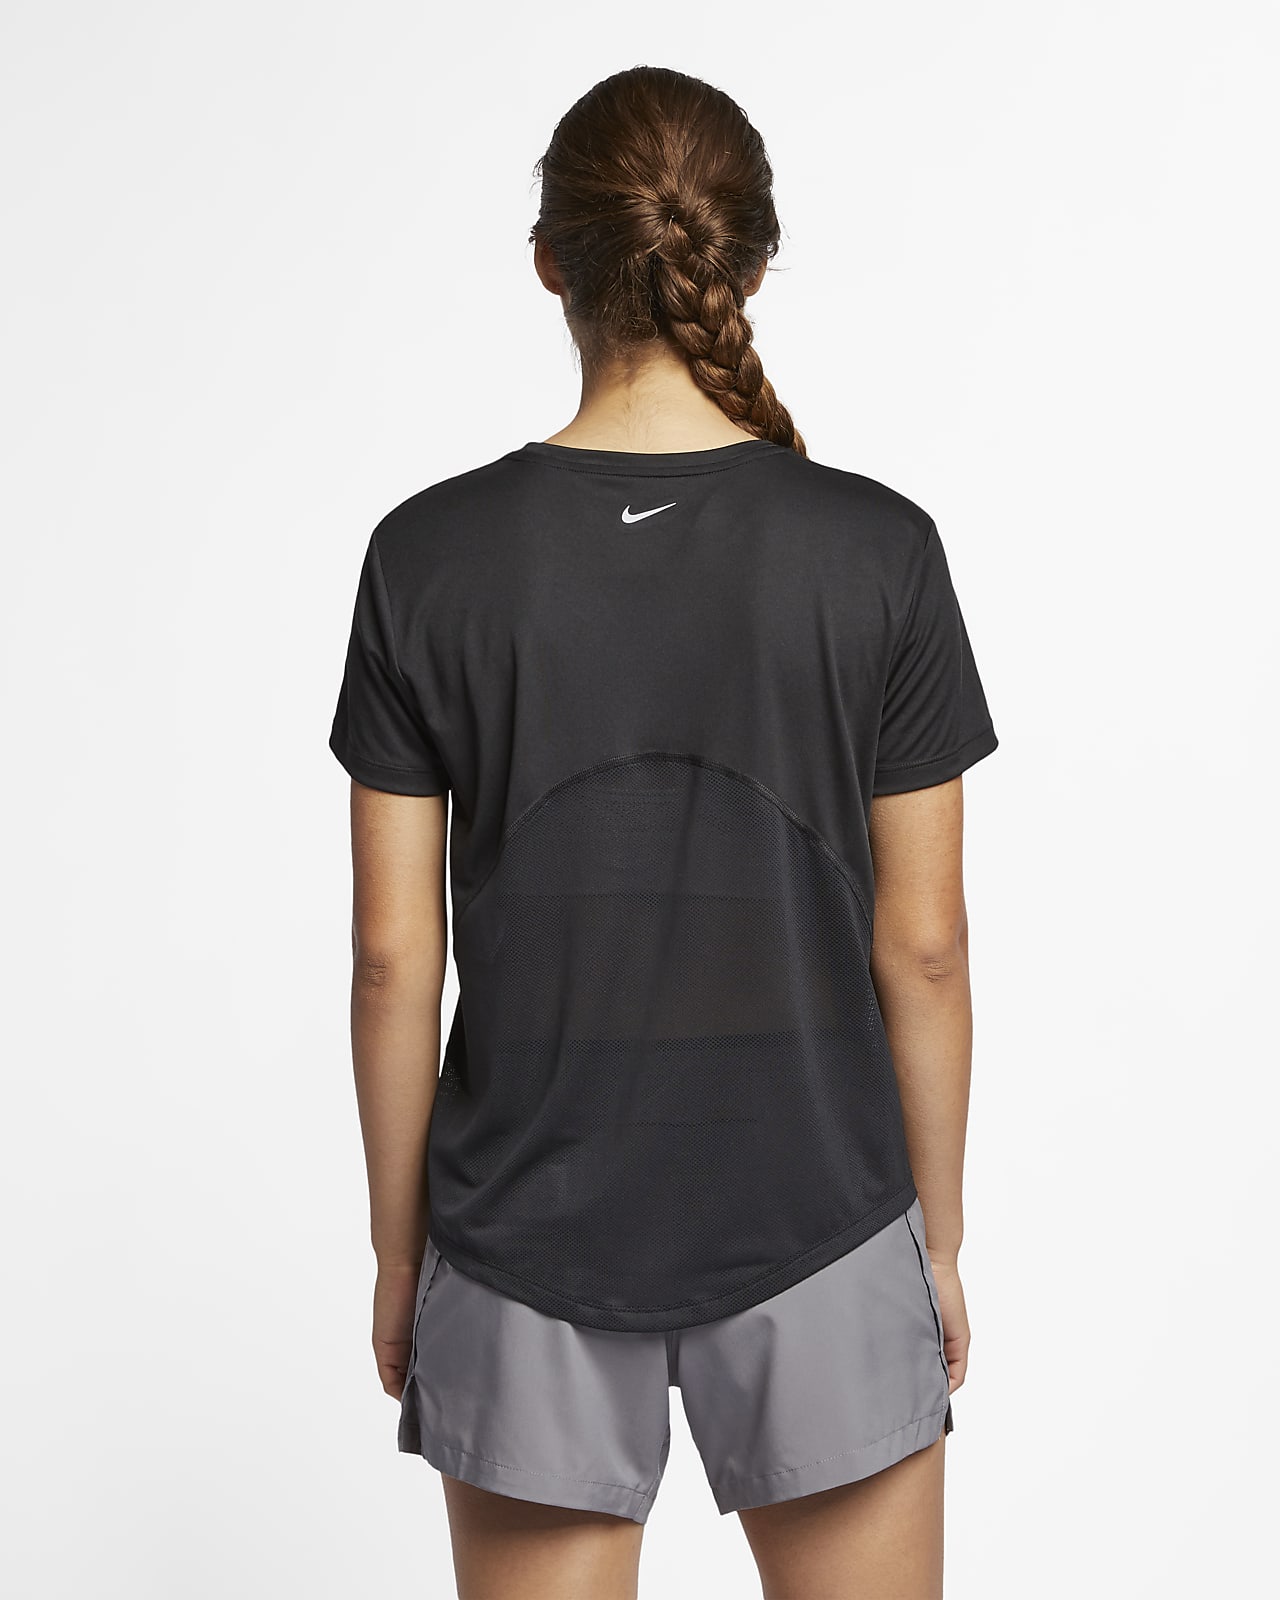 Nike Short-Sleeve Running Top.